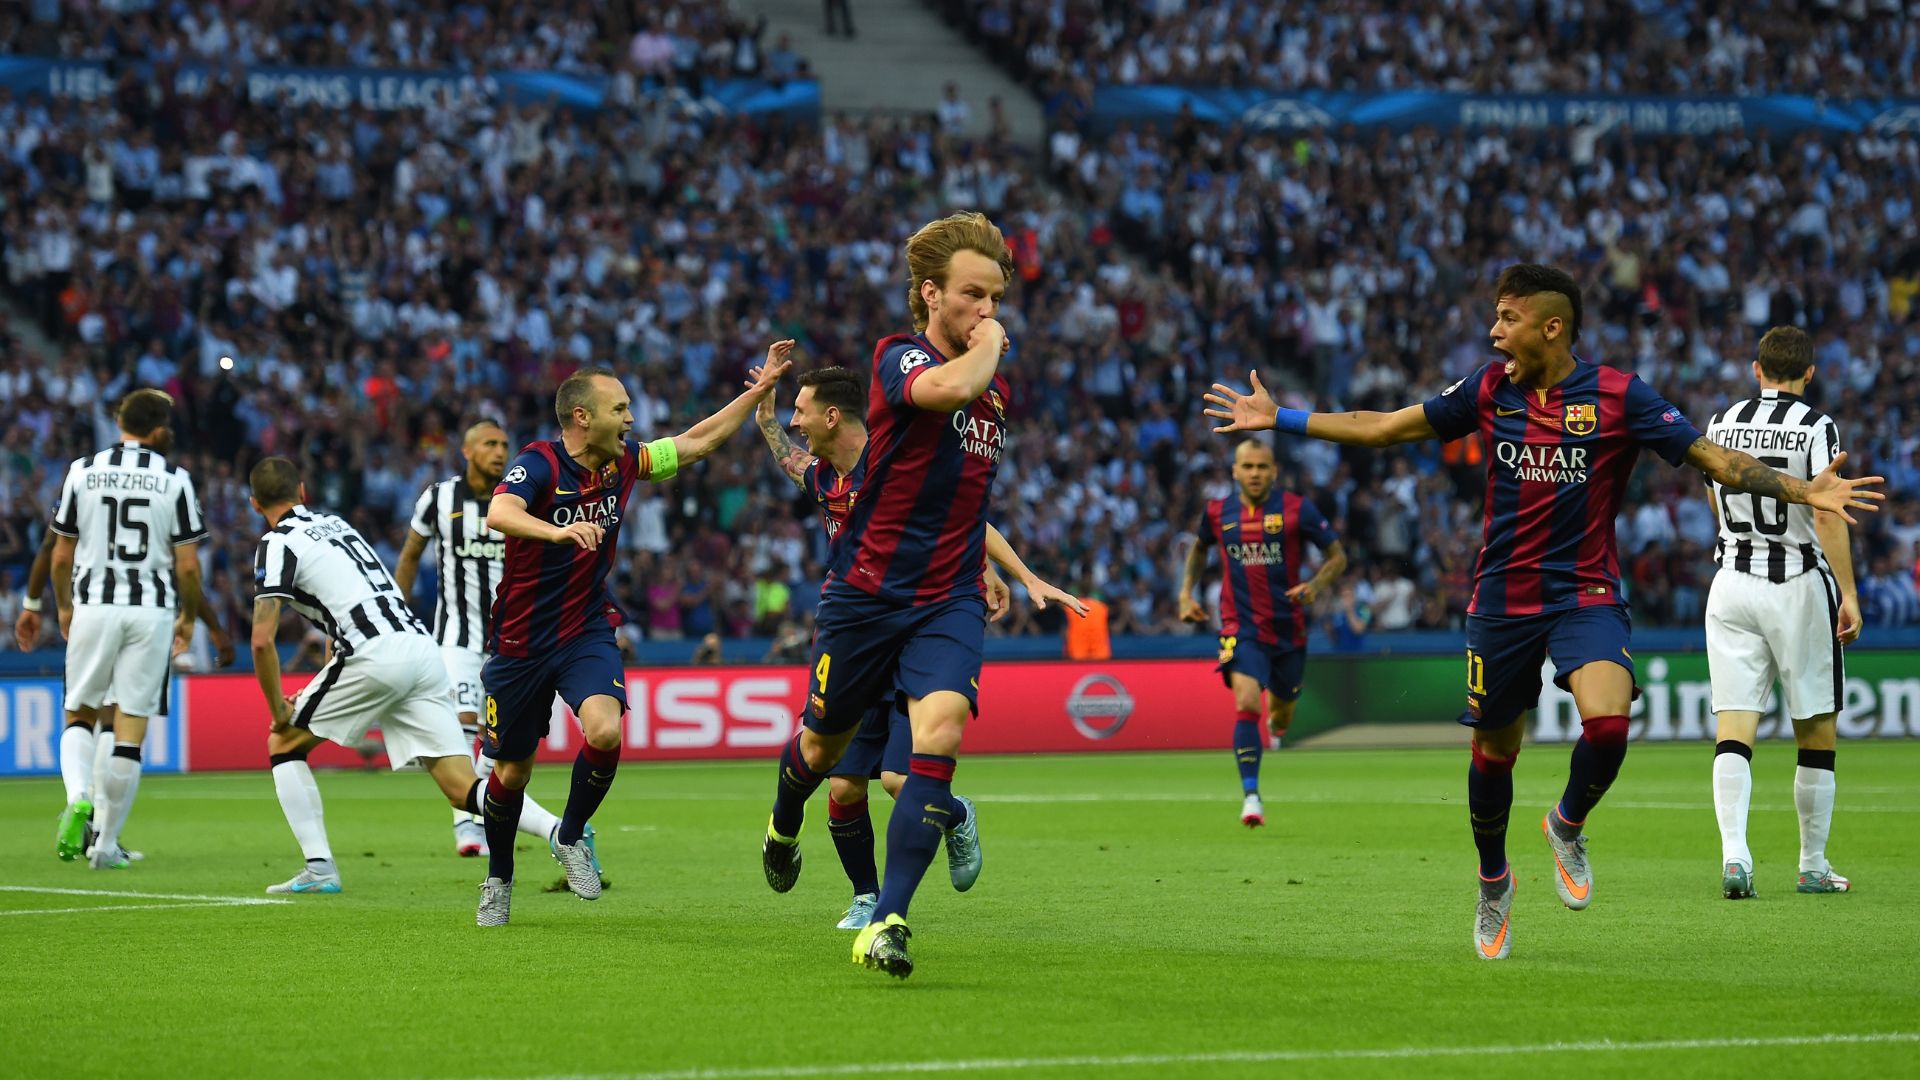 Rakitic e Neymar comemorando gol na final da Champions League 2014/2015 (Crédito: Getty Images)